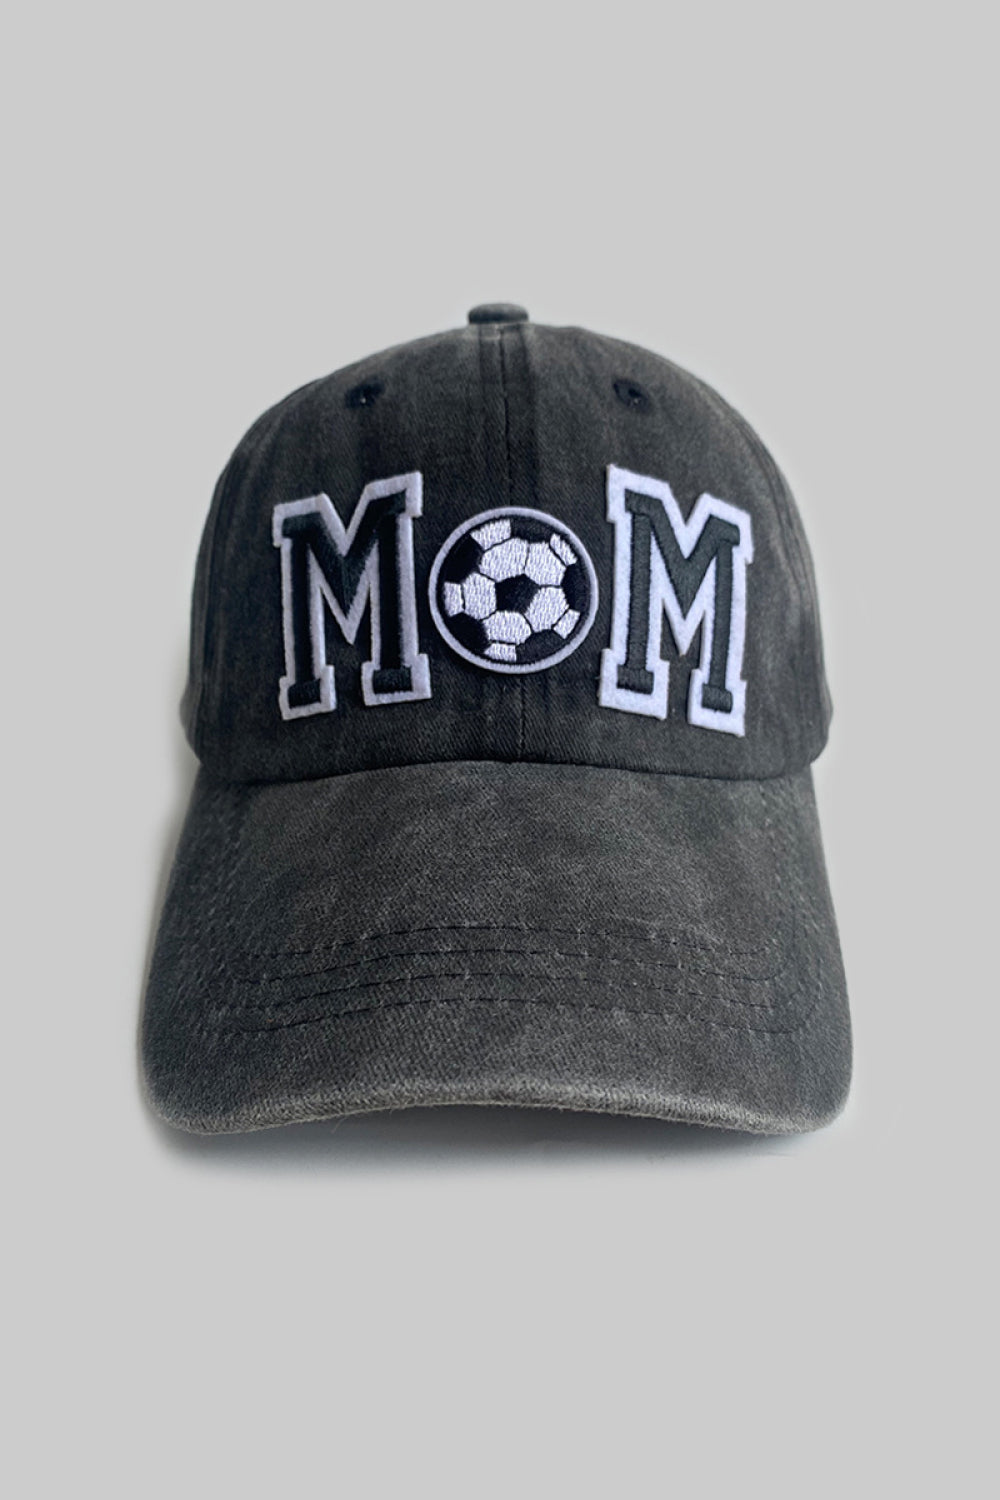 SOCCER MOM Distressed Baseball Style Cap Hat